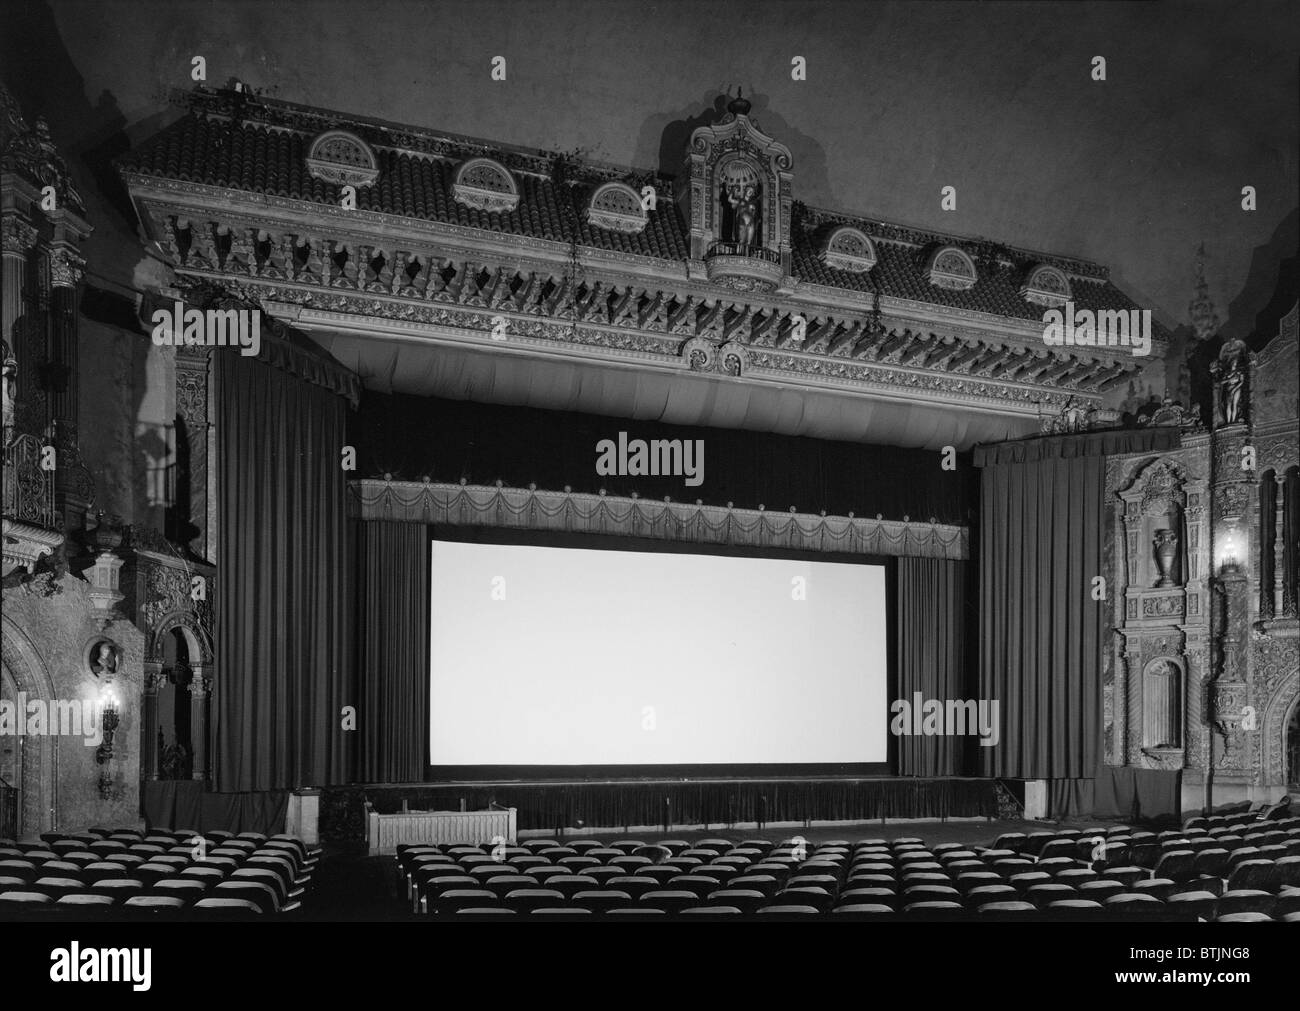 Theater cheap omaha movie movie theaters?